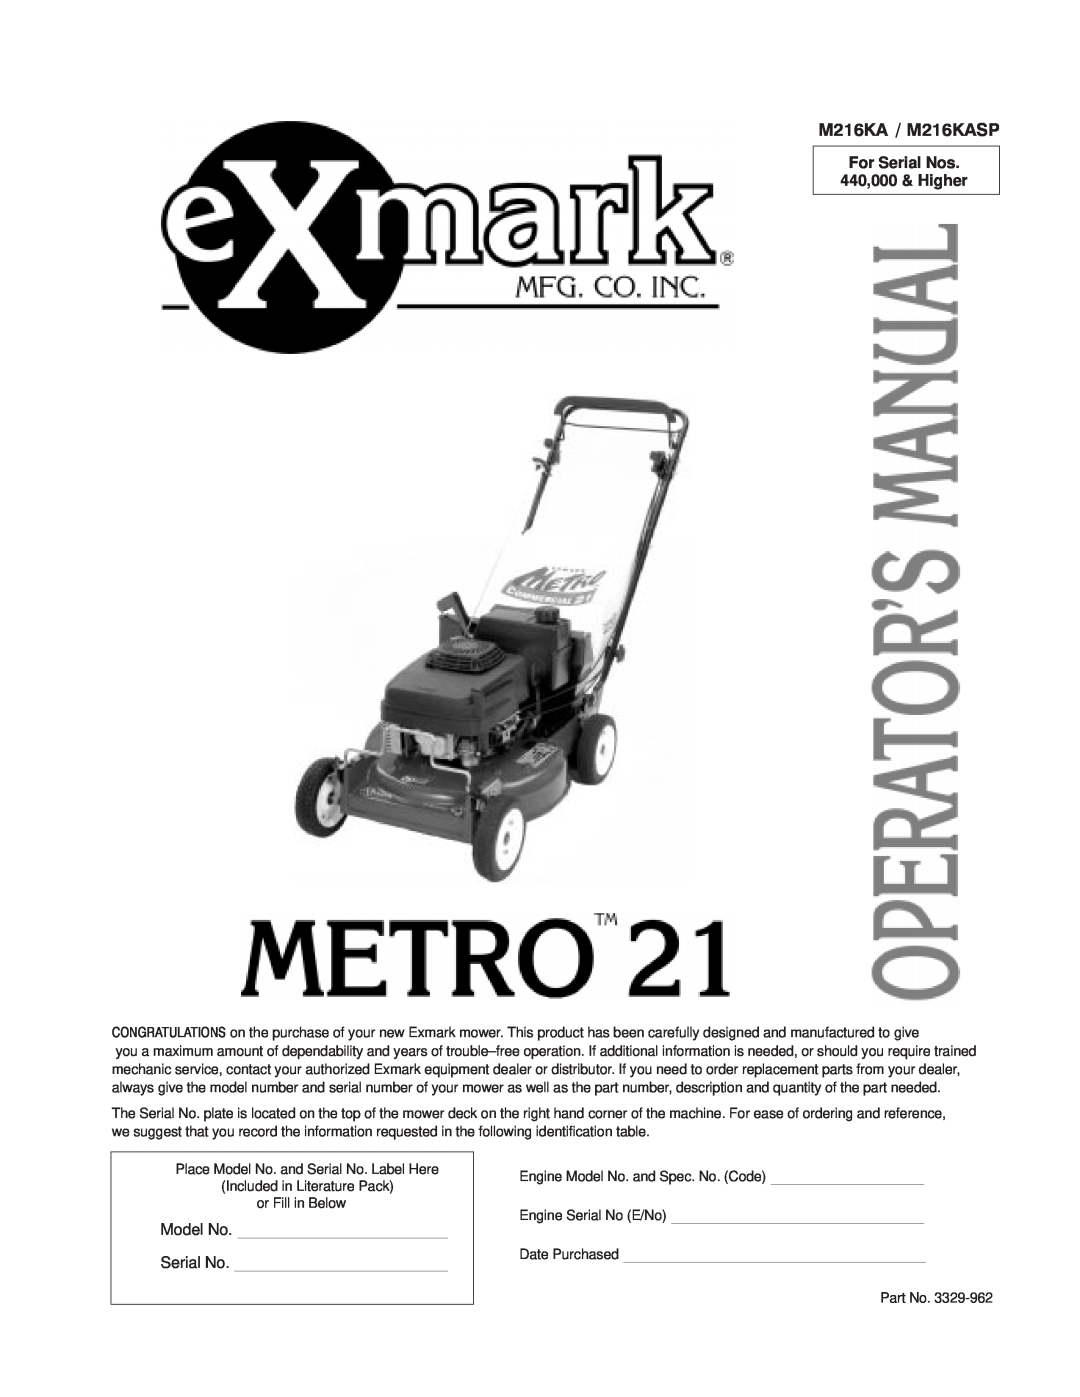 Exmark M216KA, M216KASP manual M216KA / M216KASP, For Serial Nos 440,000 & Higher 